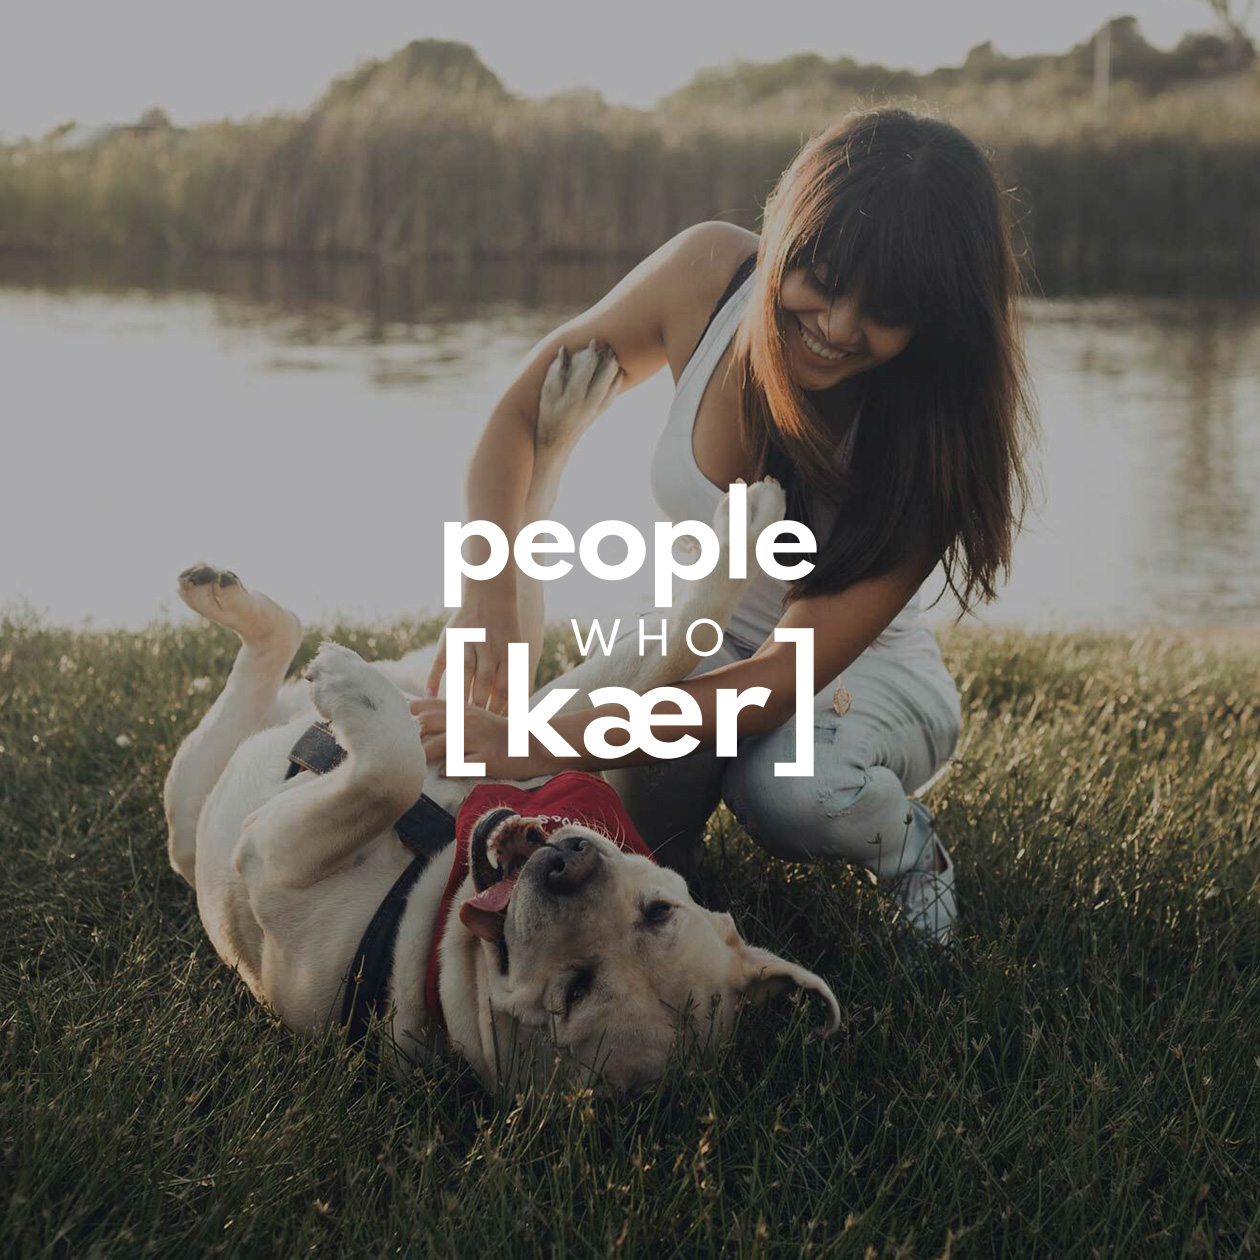 People Who Kaer